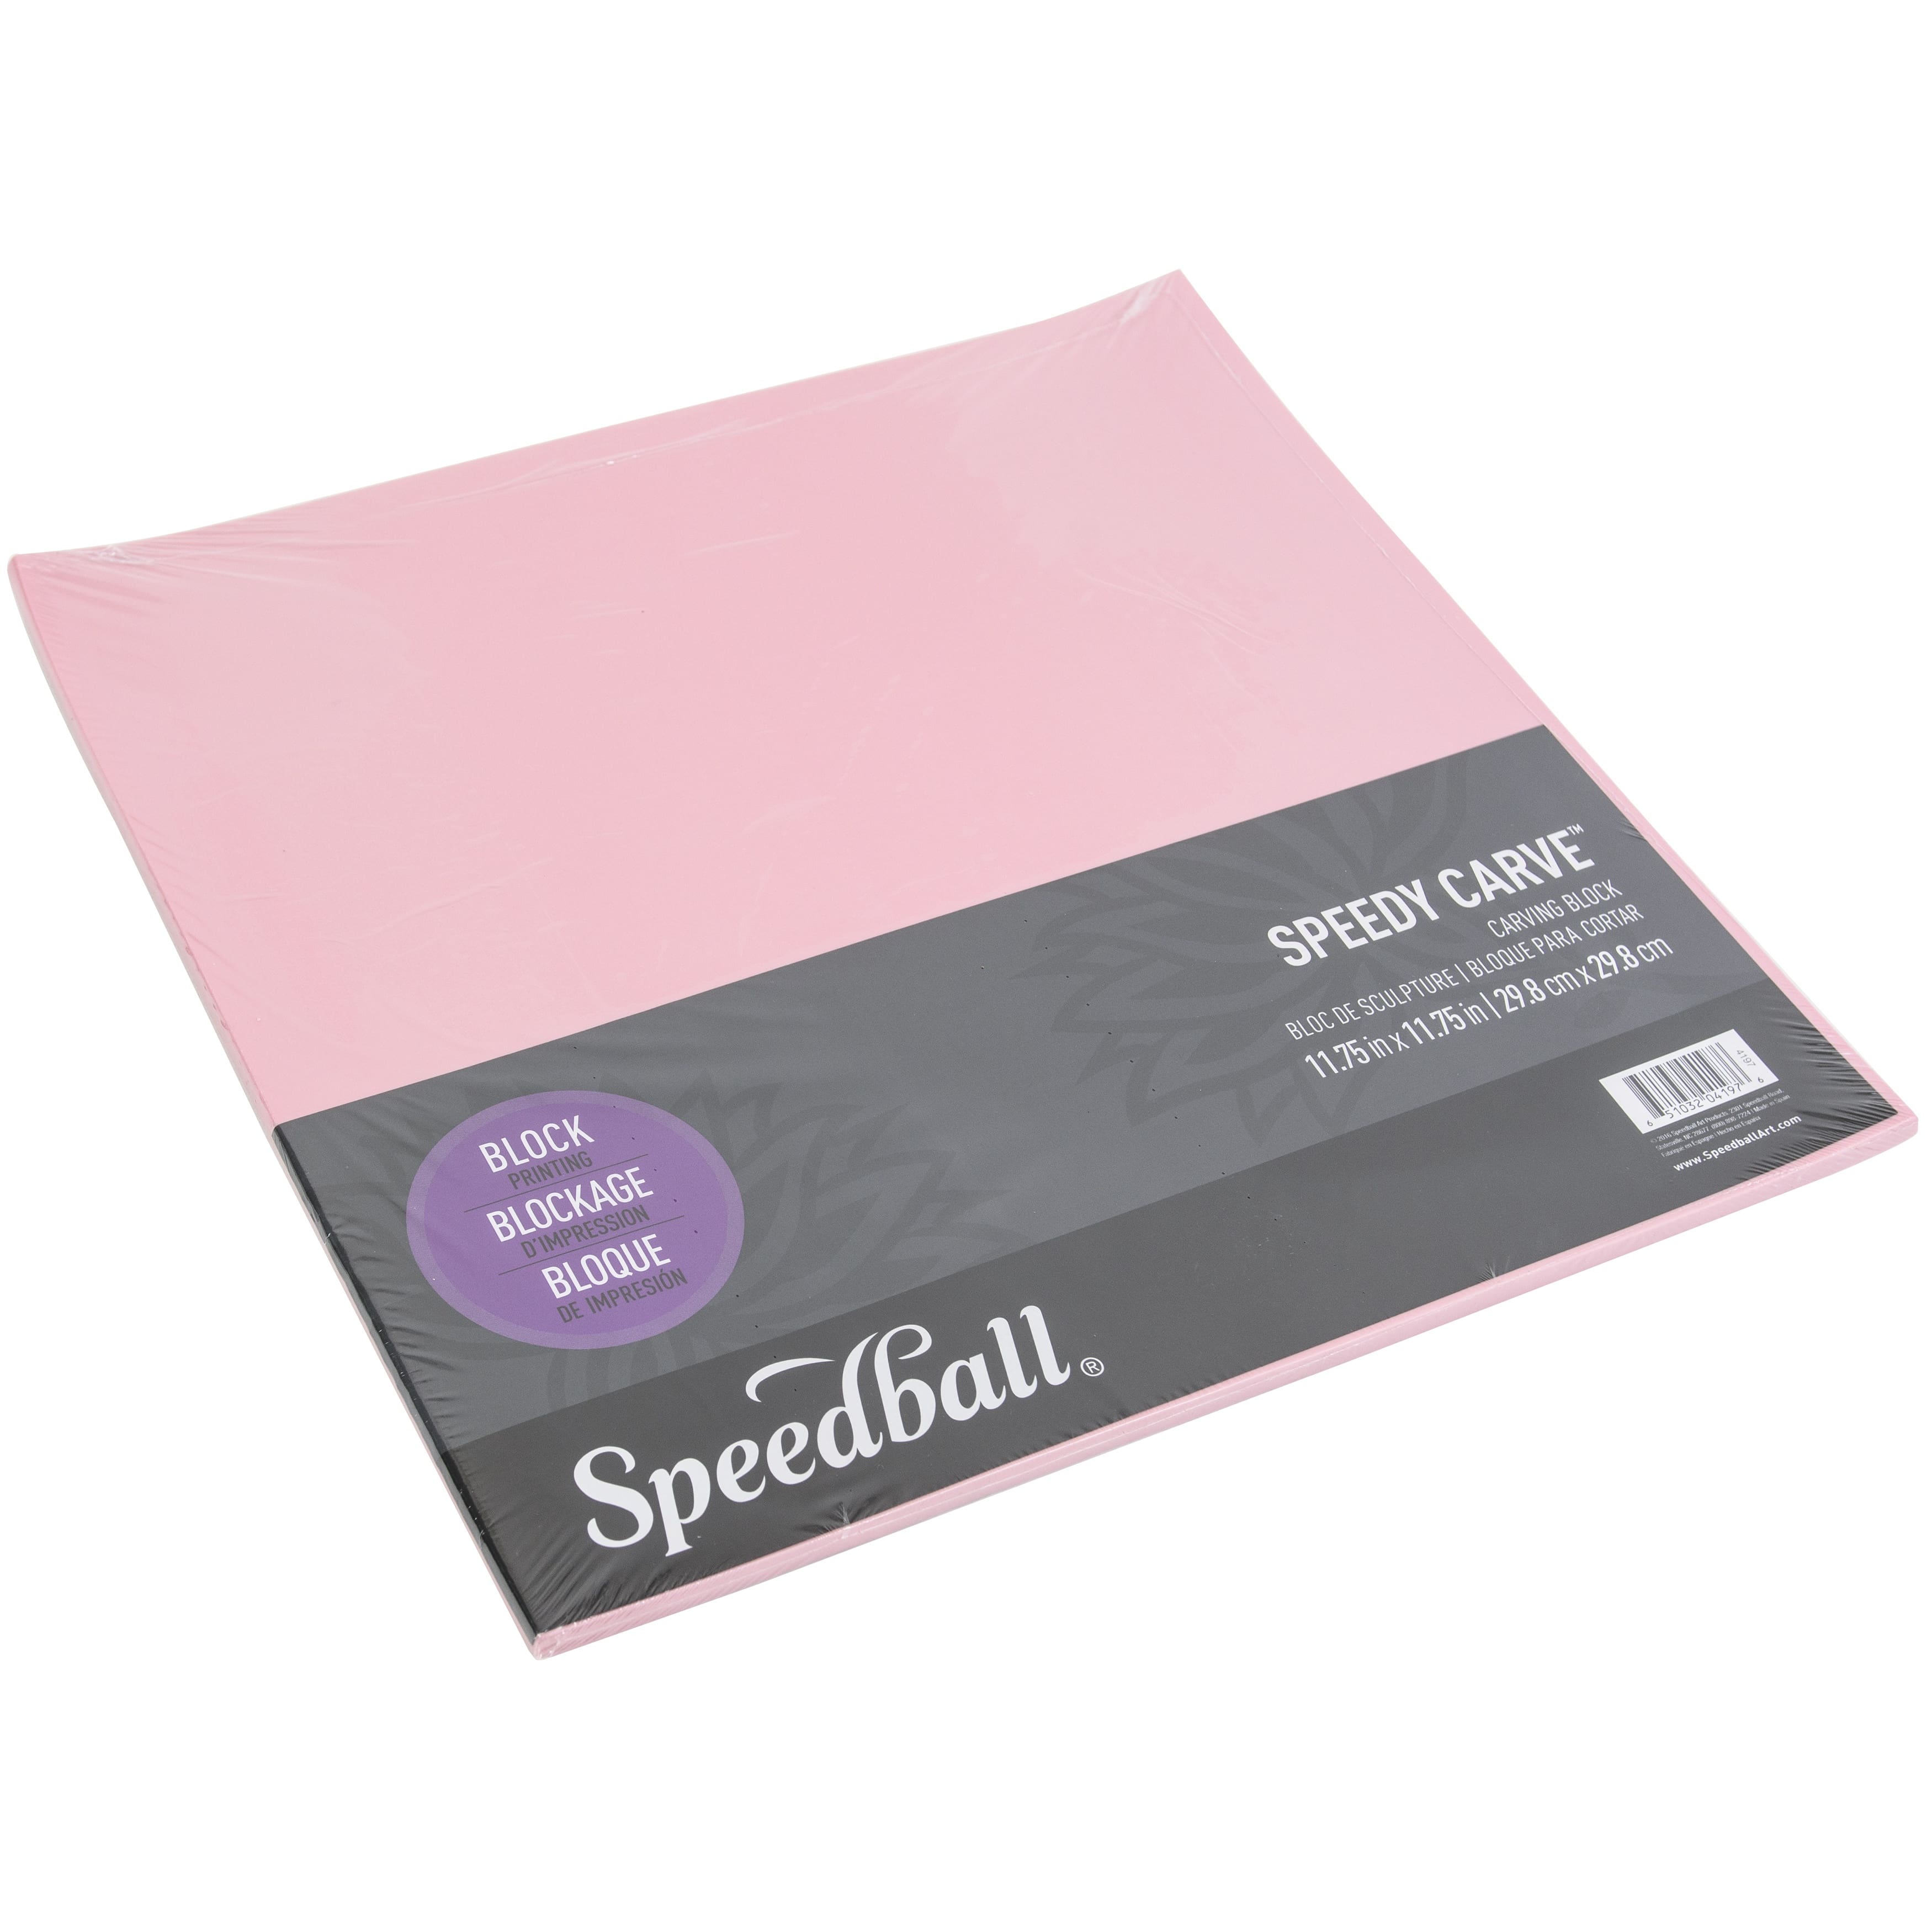 Speedball Speedy-Carve Block Printing Kit